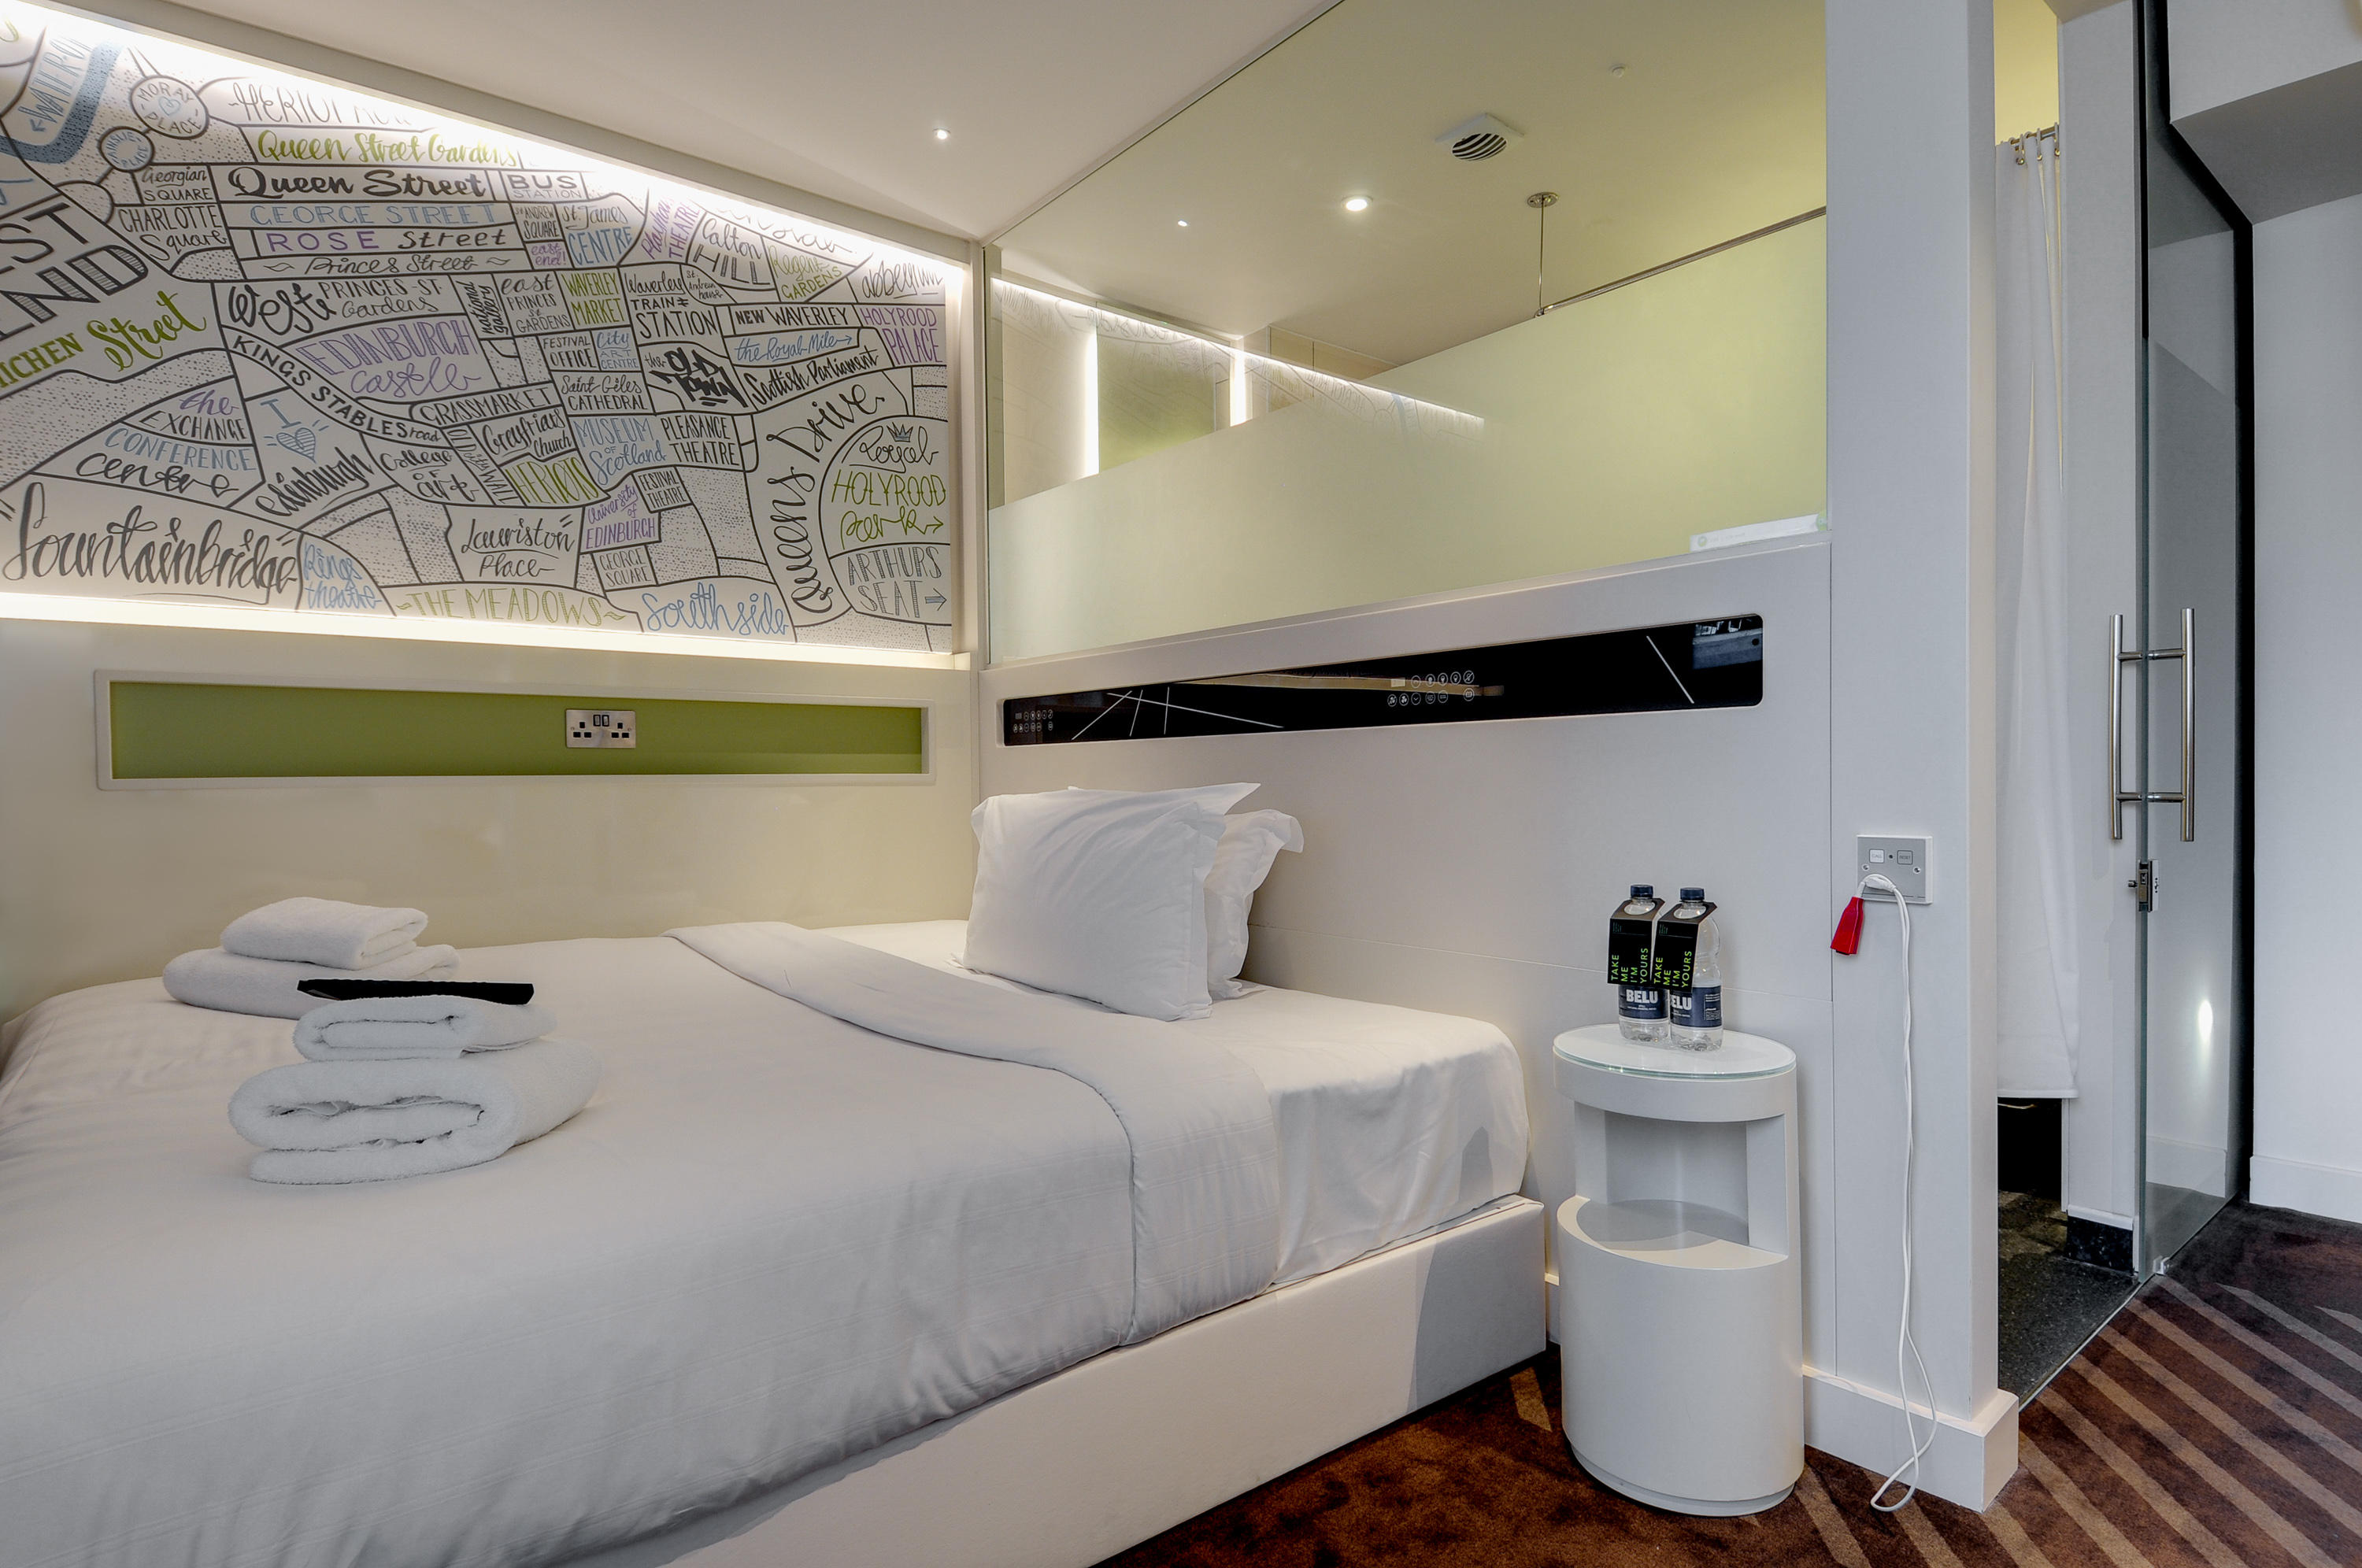 Images hub by Premier Inn London Spitalfields, Brick Lane hotel